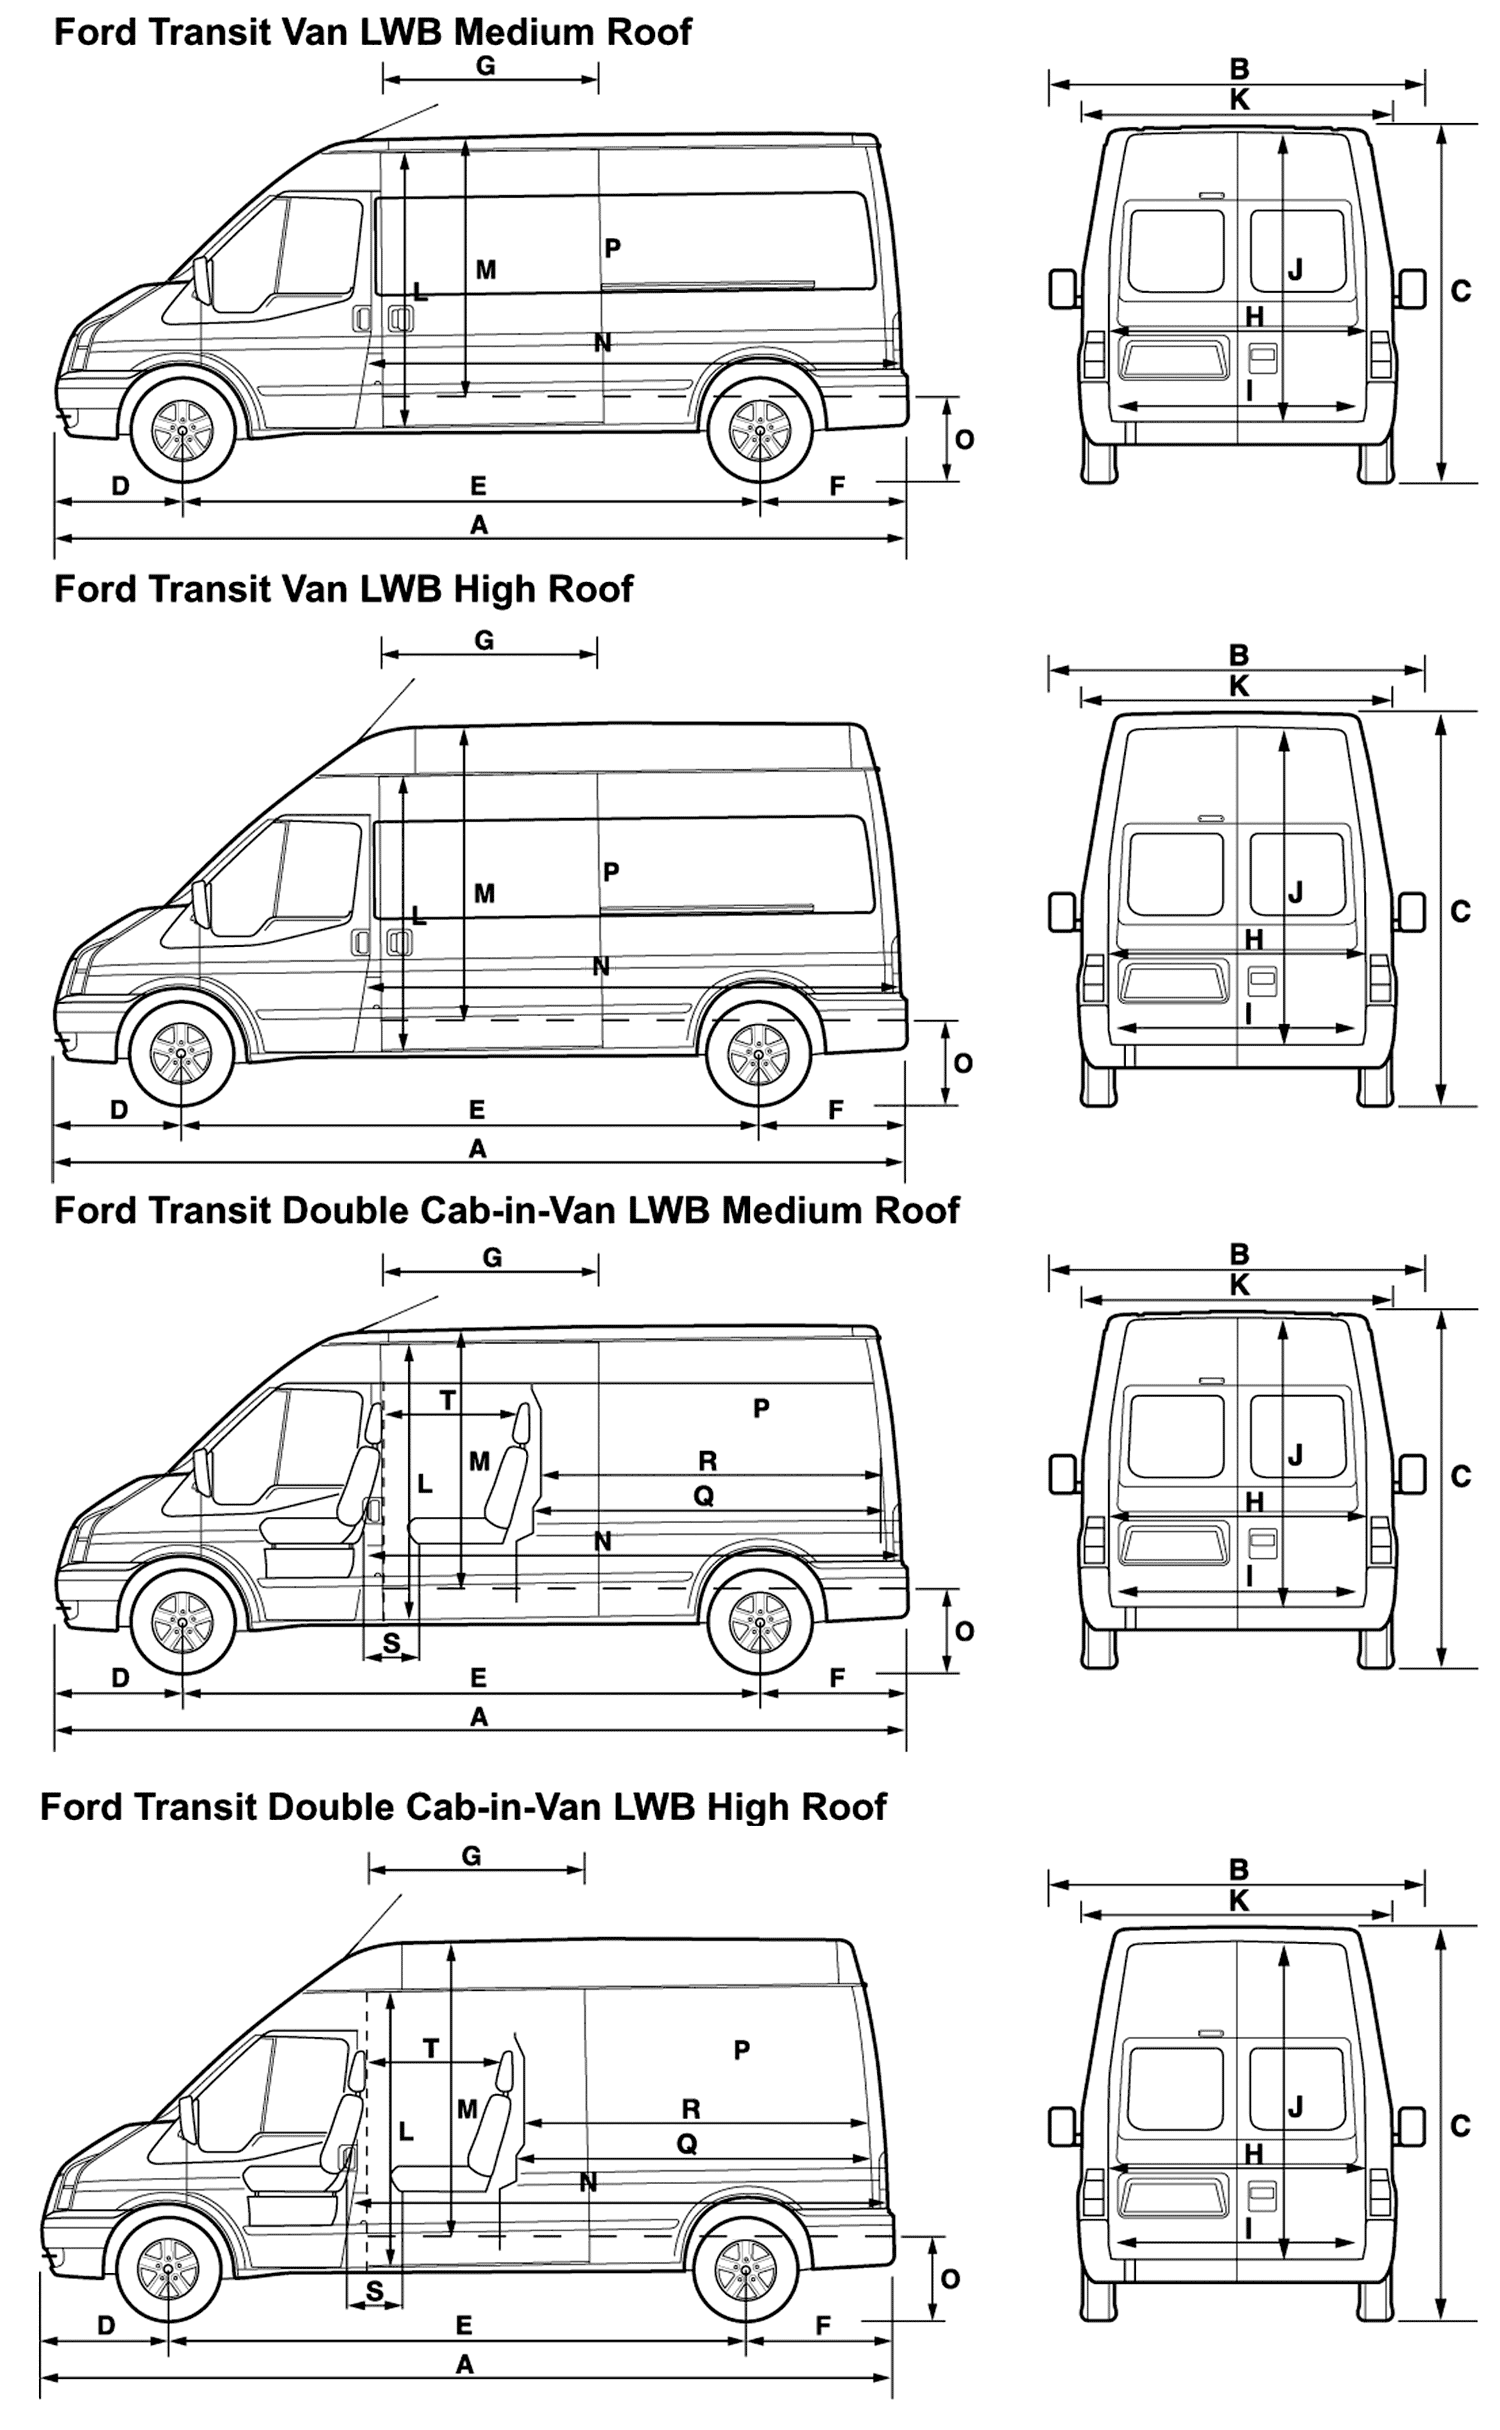 Ford transit van blueprints #3